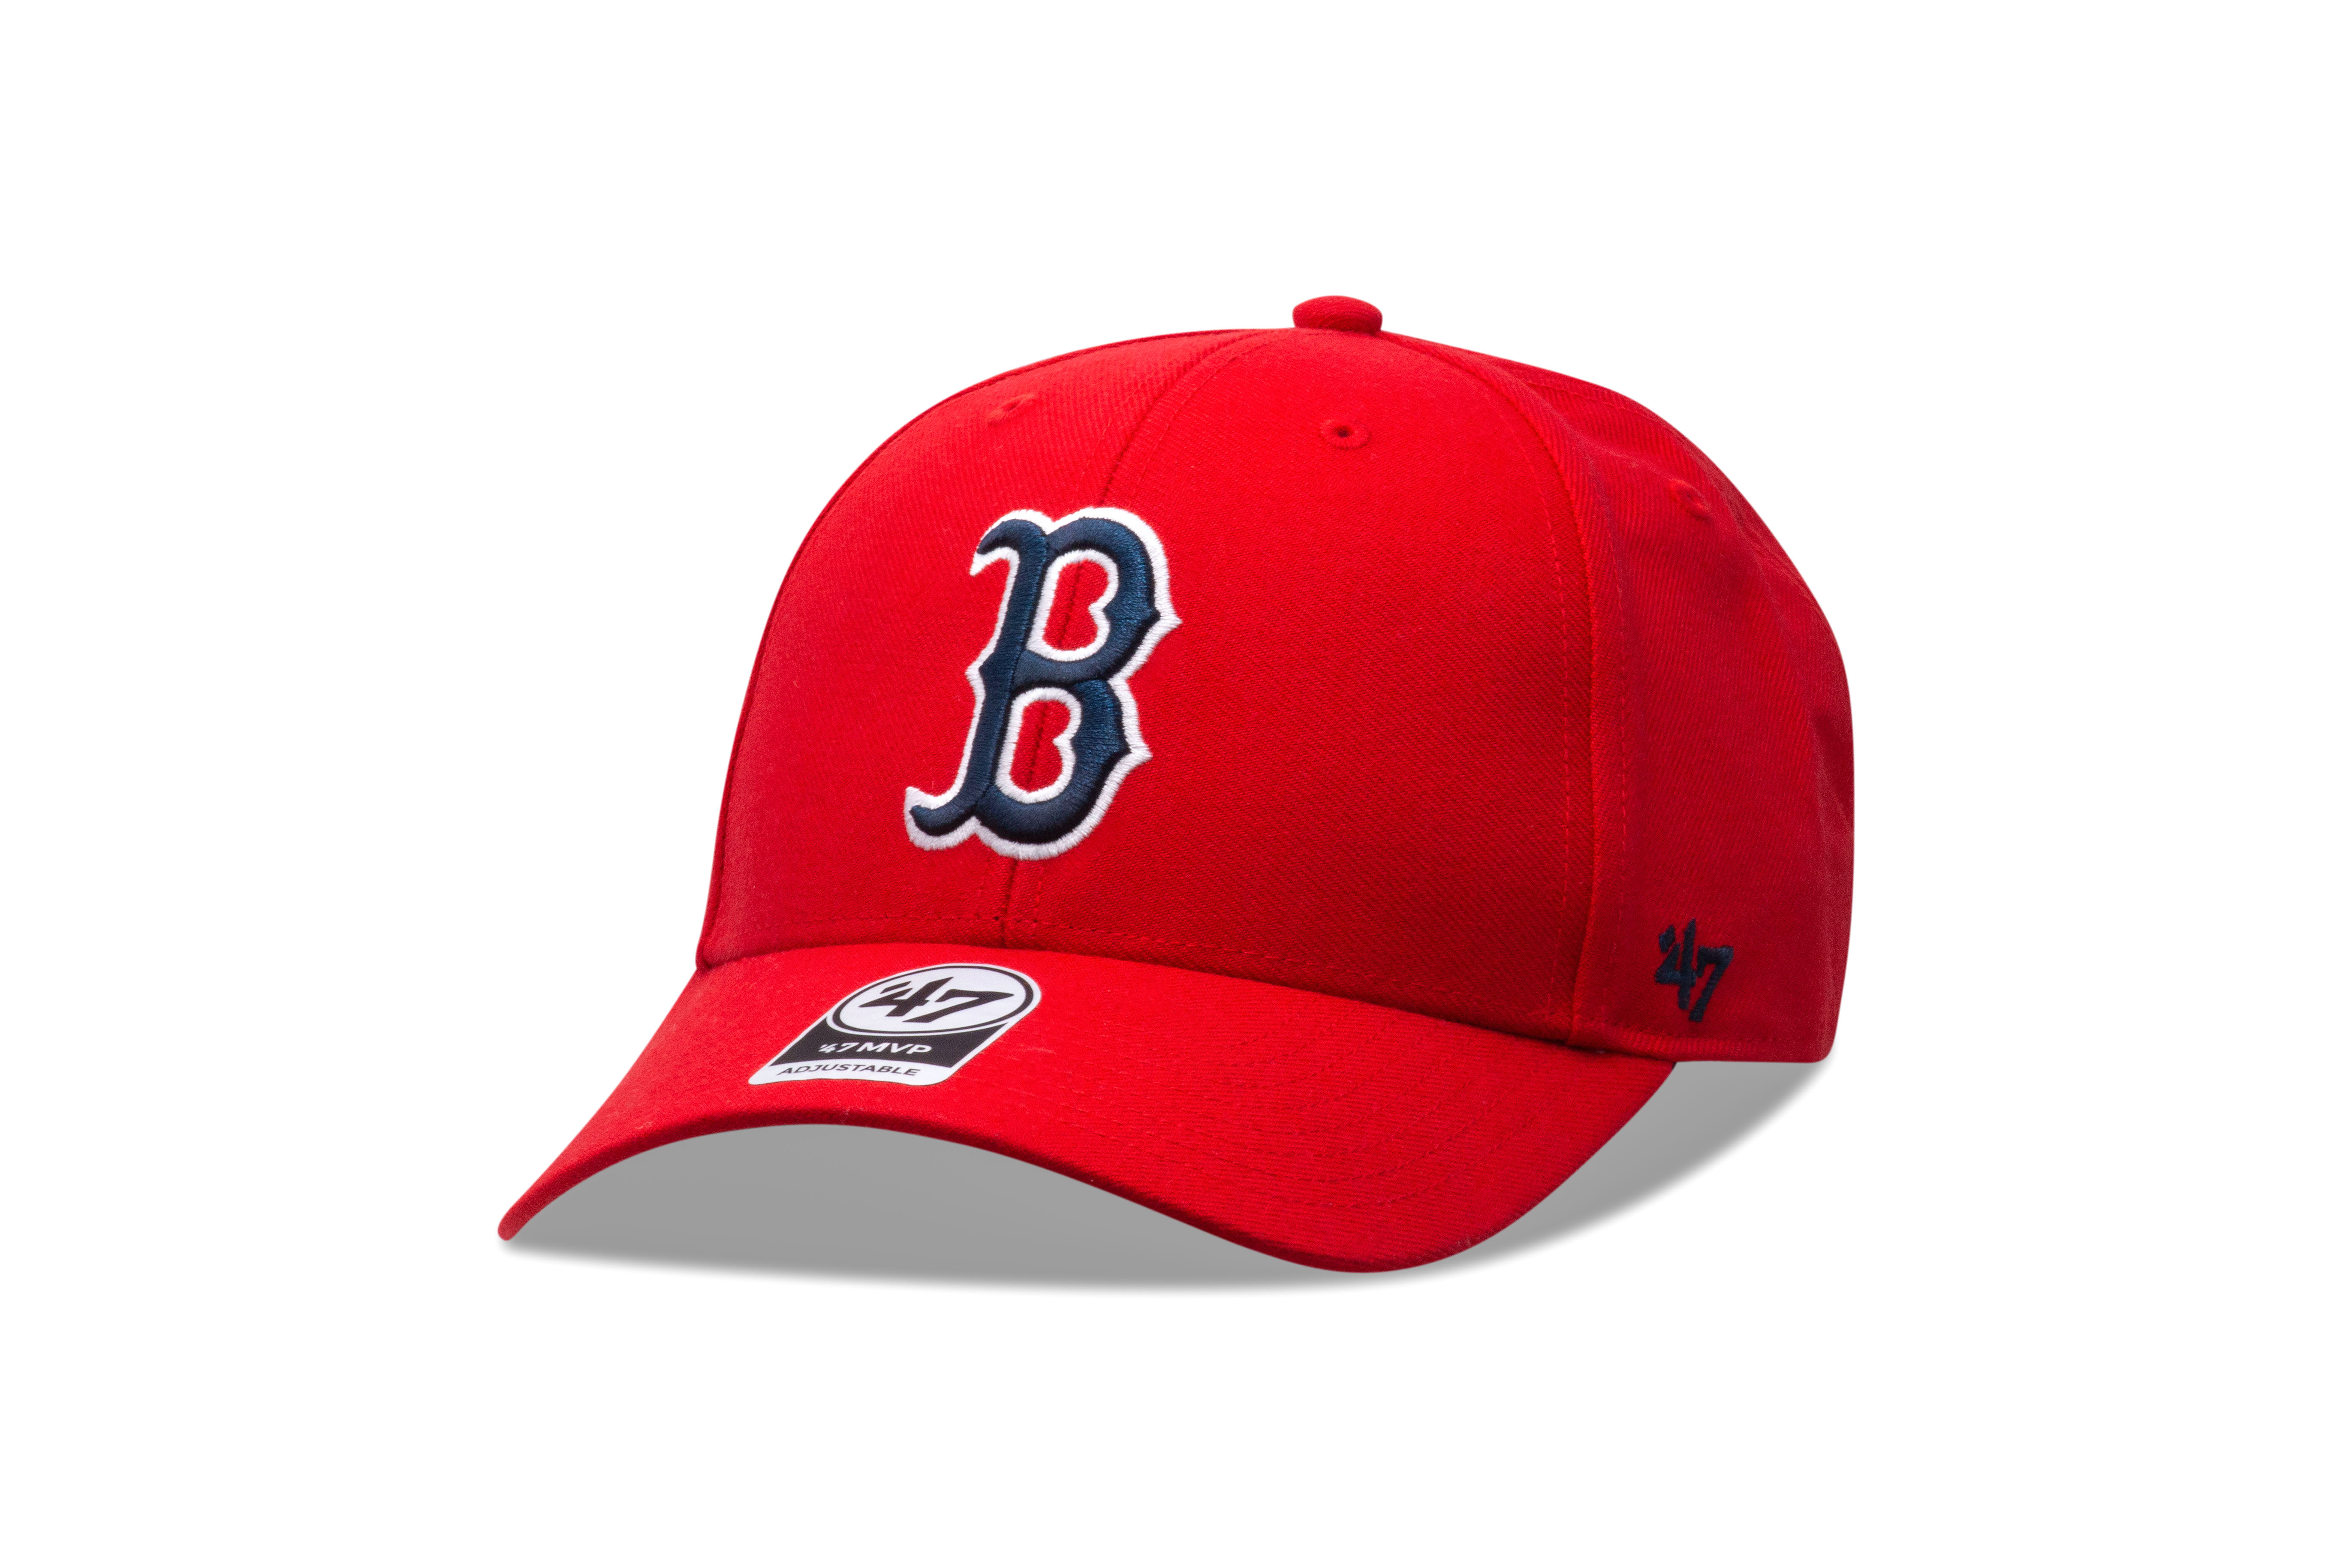 47 Boston Red Sox Baseball Cap